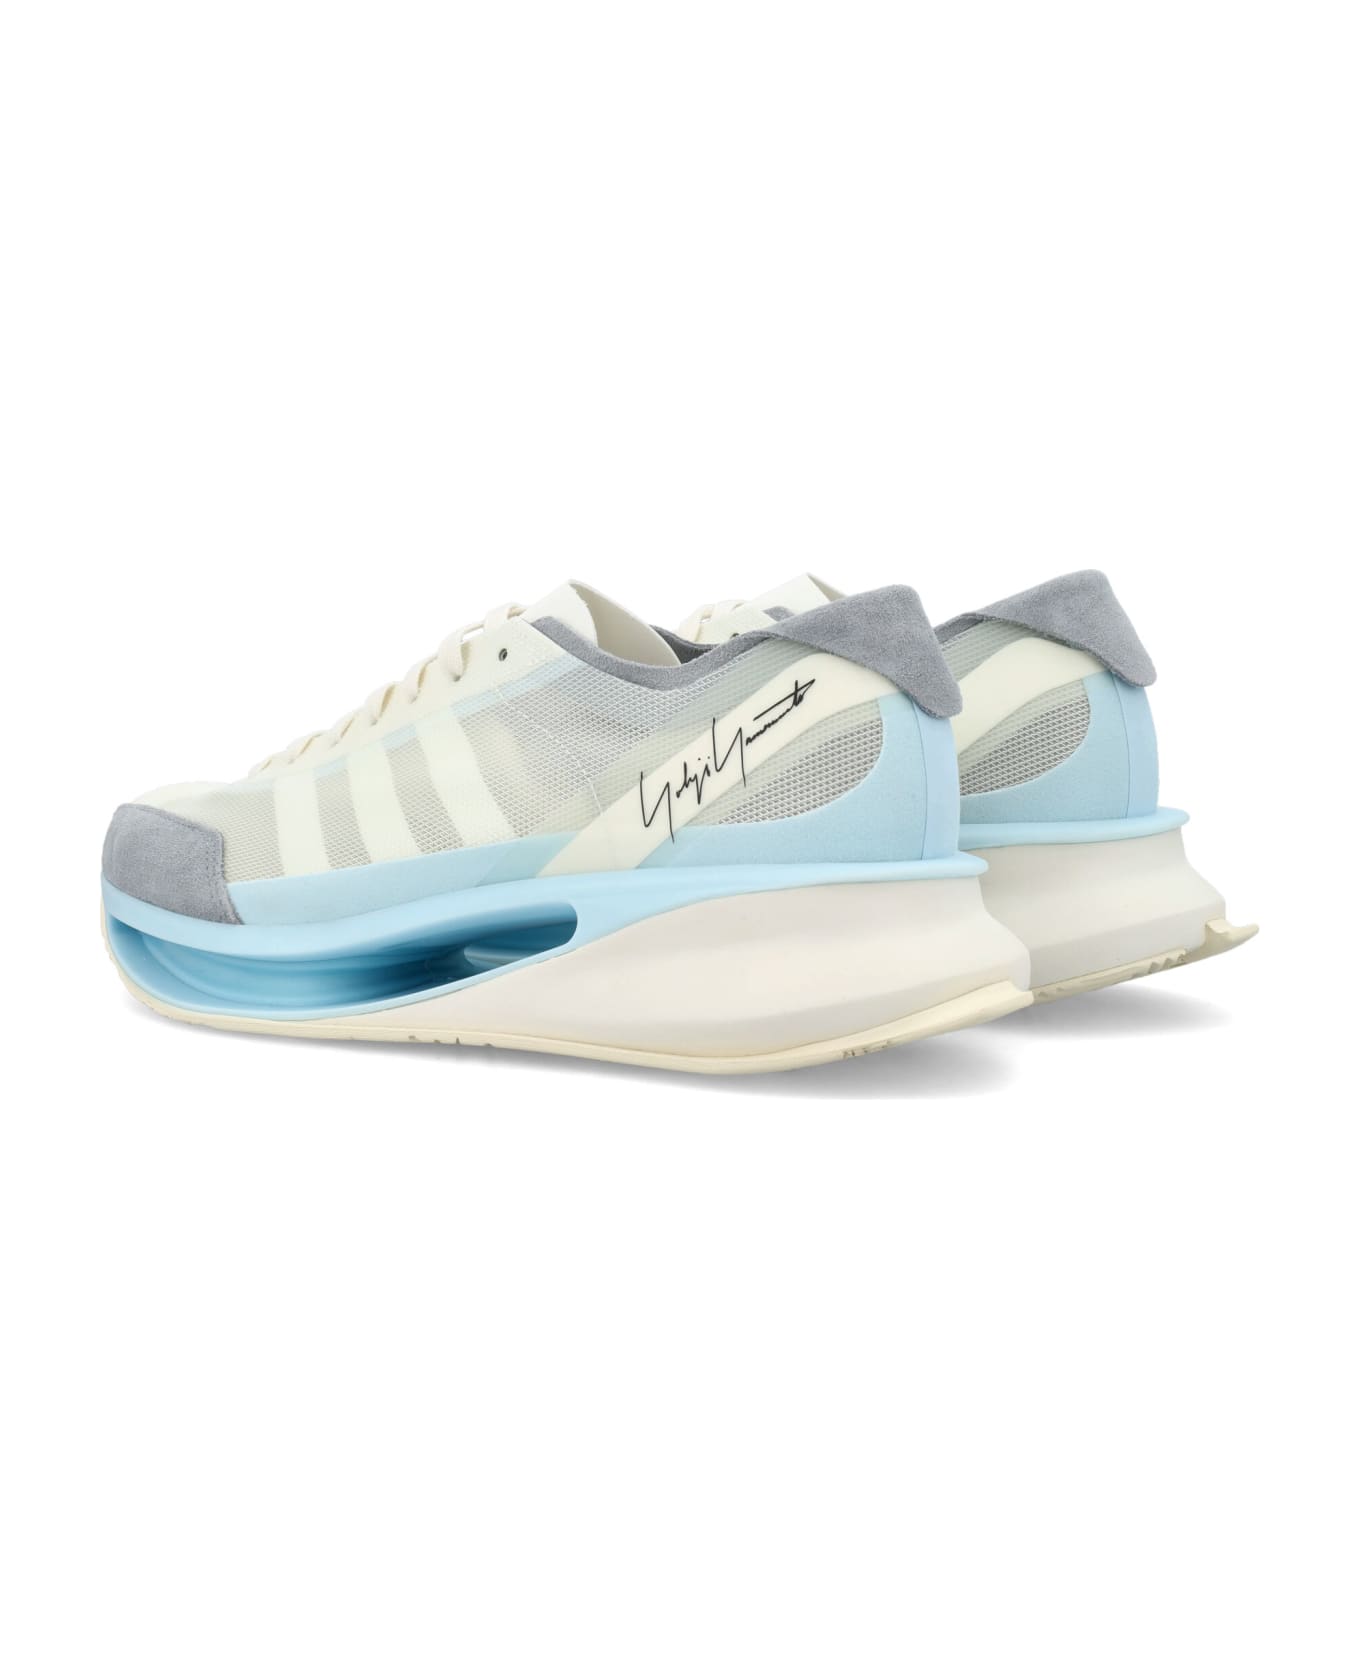 Y-3 Gendo Run Sneakers - LIGHT BLUE WHITE